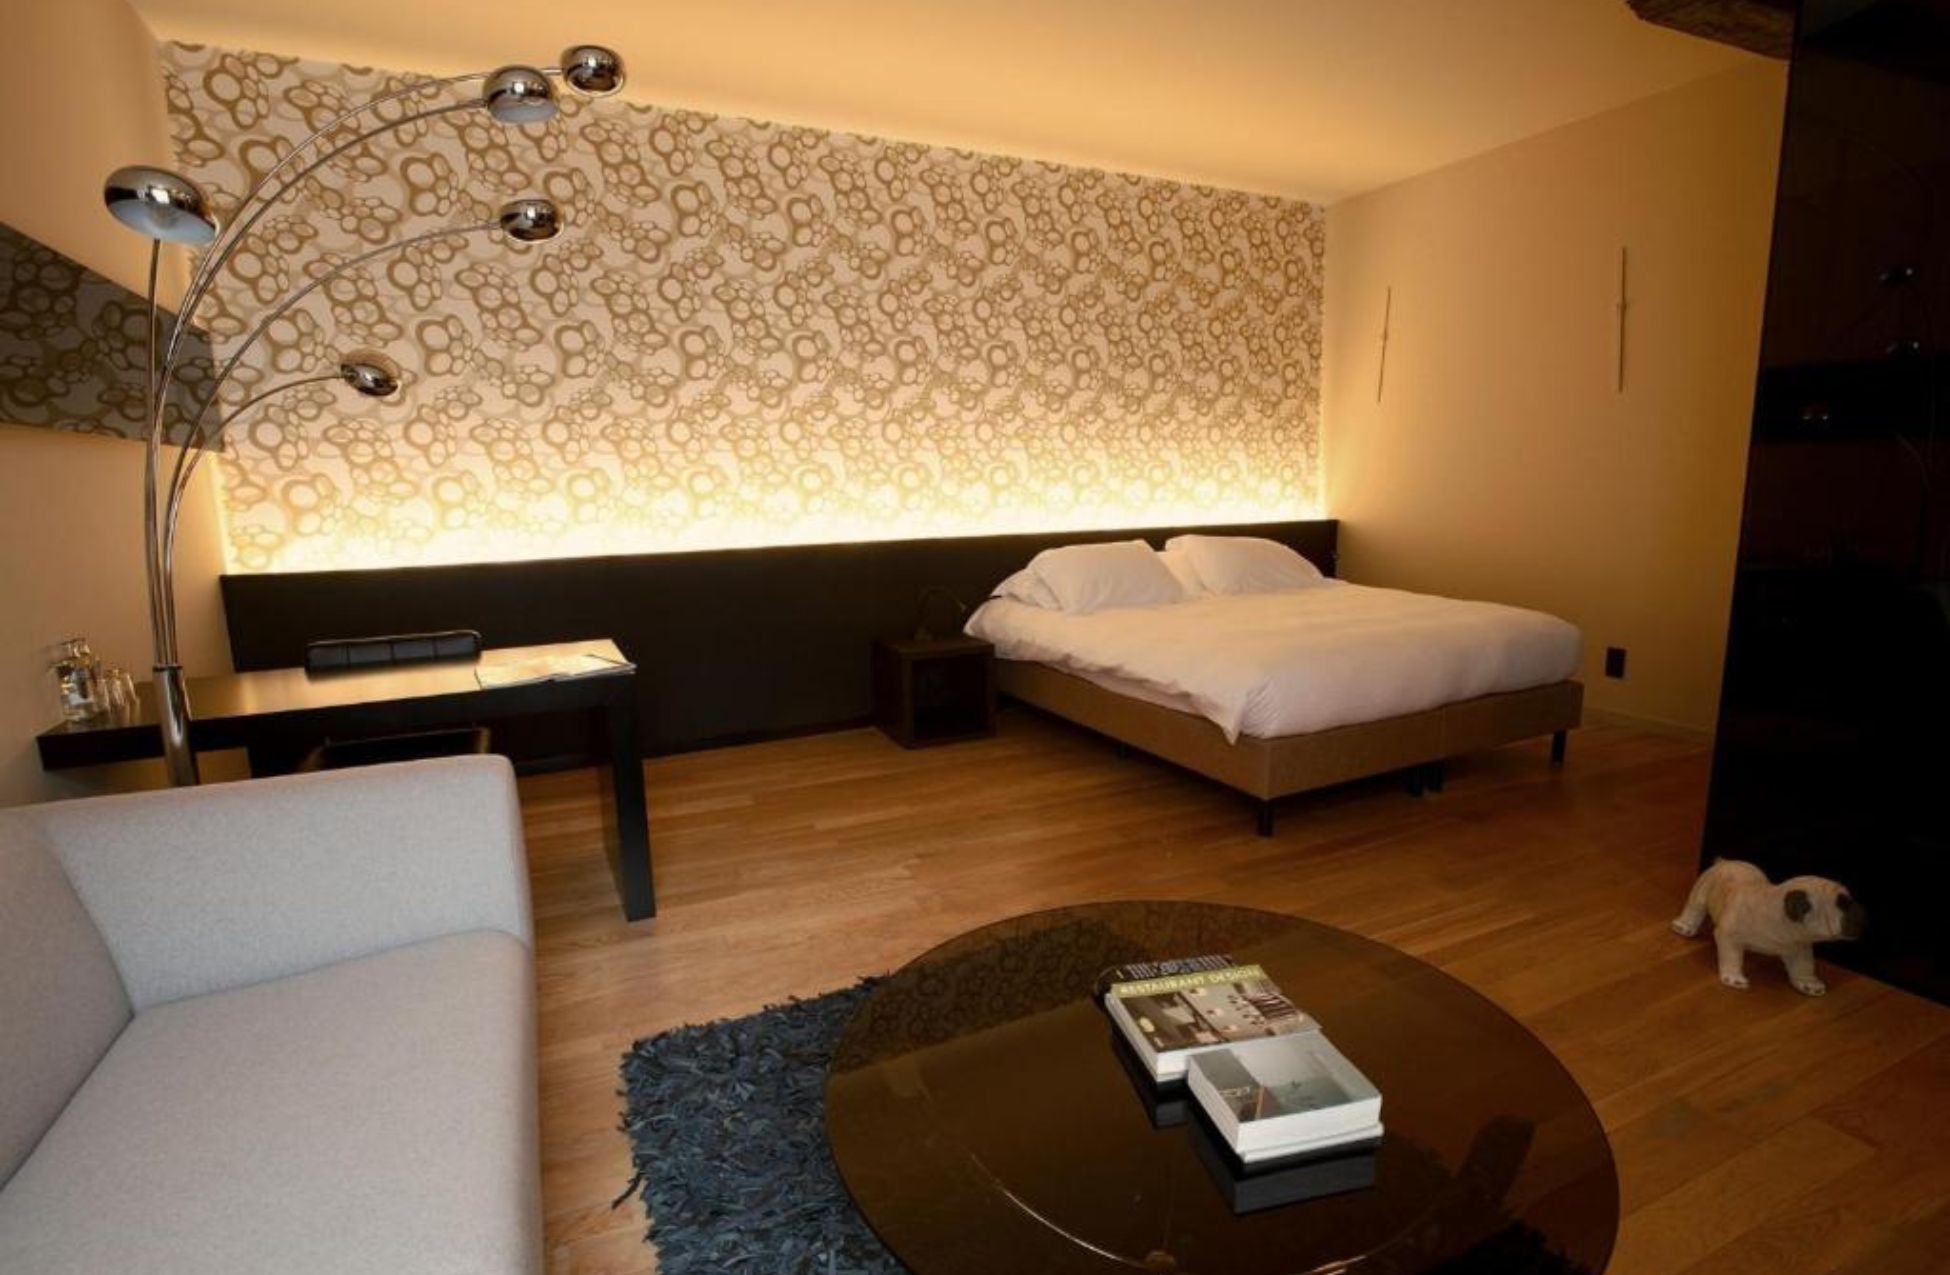 Hotel Matelote – City Centre - Best Hotels In Antwerp